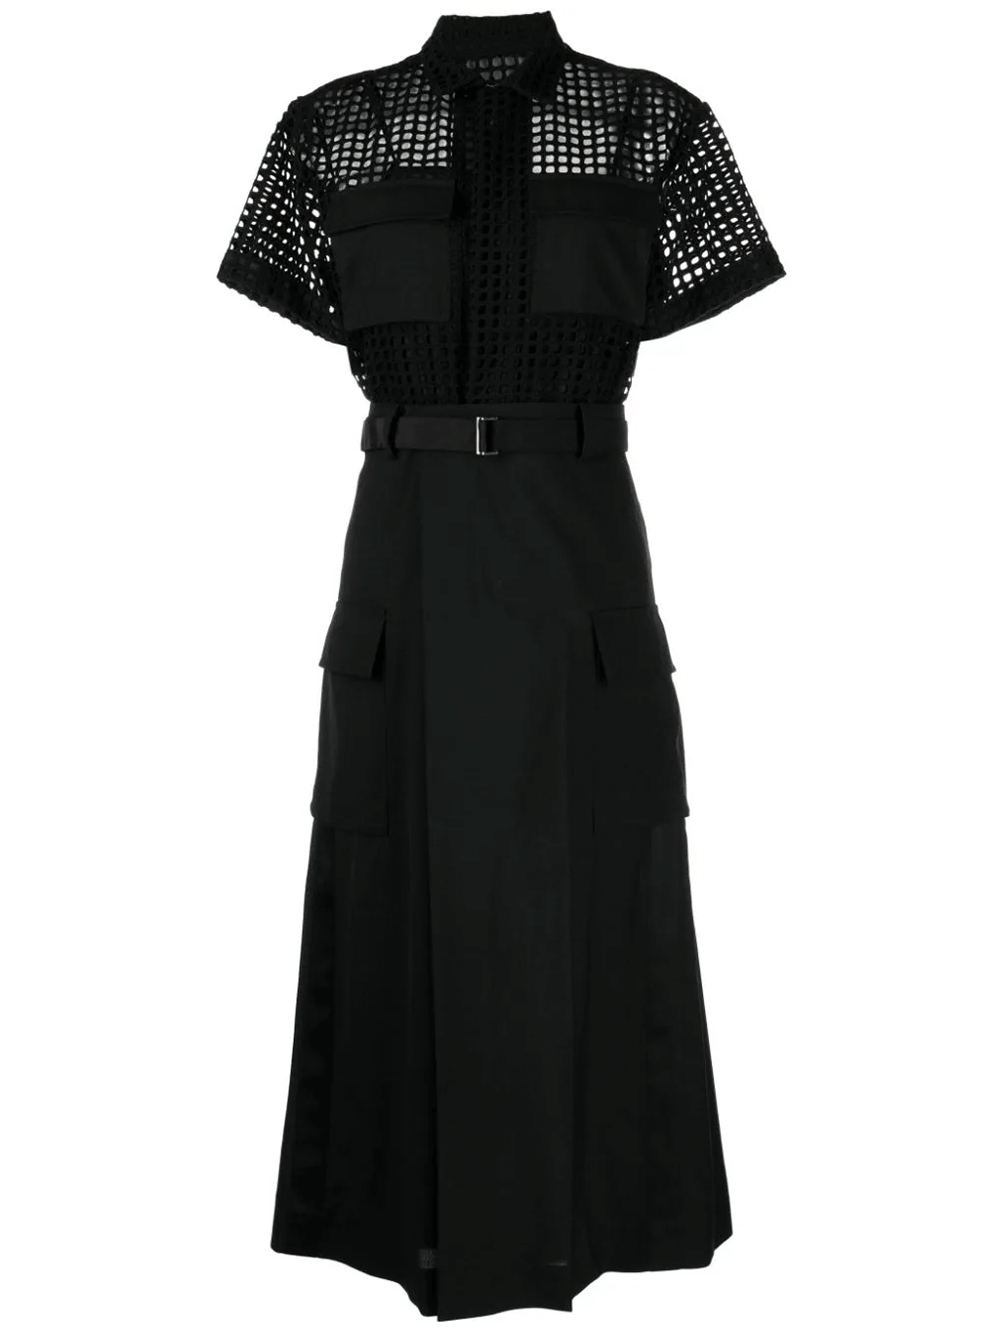 sacai-Embroidery-Lace-Dress-Black-1